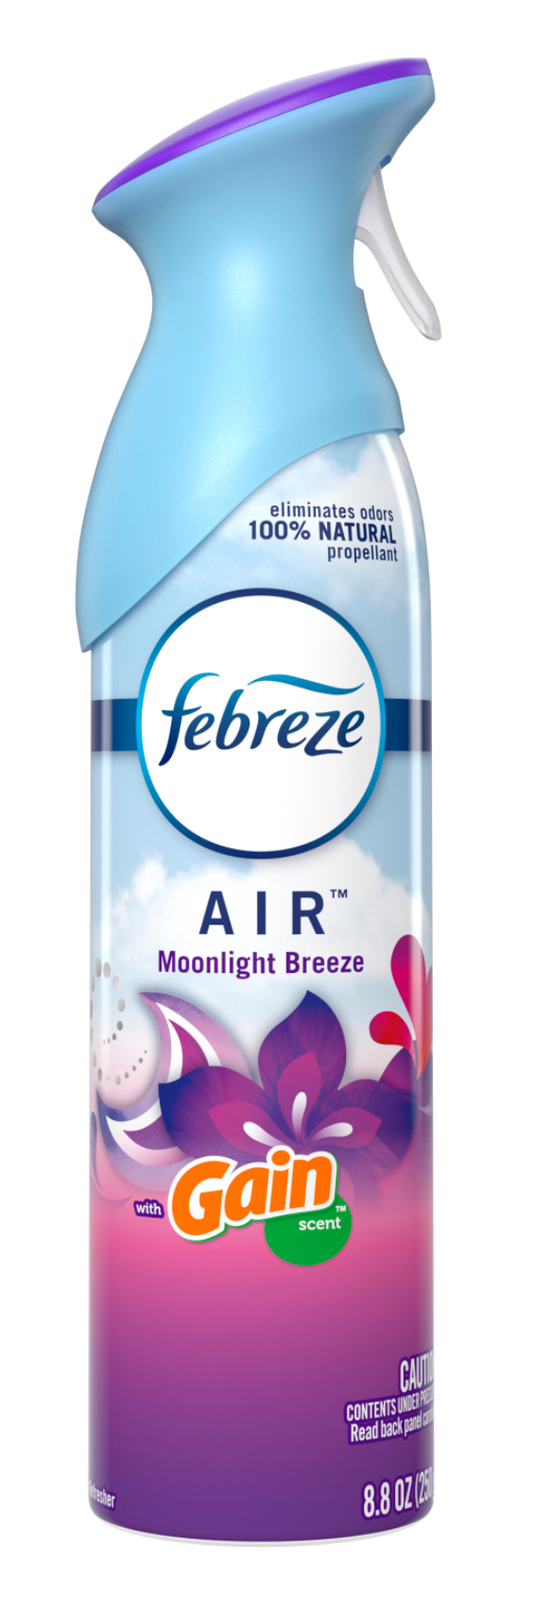 Primary image for Febreze Odor-Eliminating Air Freshener Spray, Moonlight Breeze, 1 ct, 8.8 fl oz